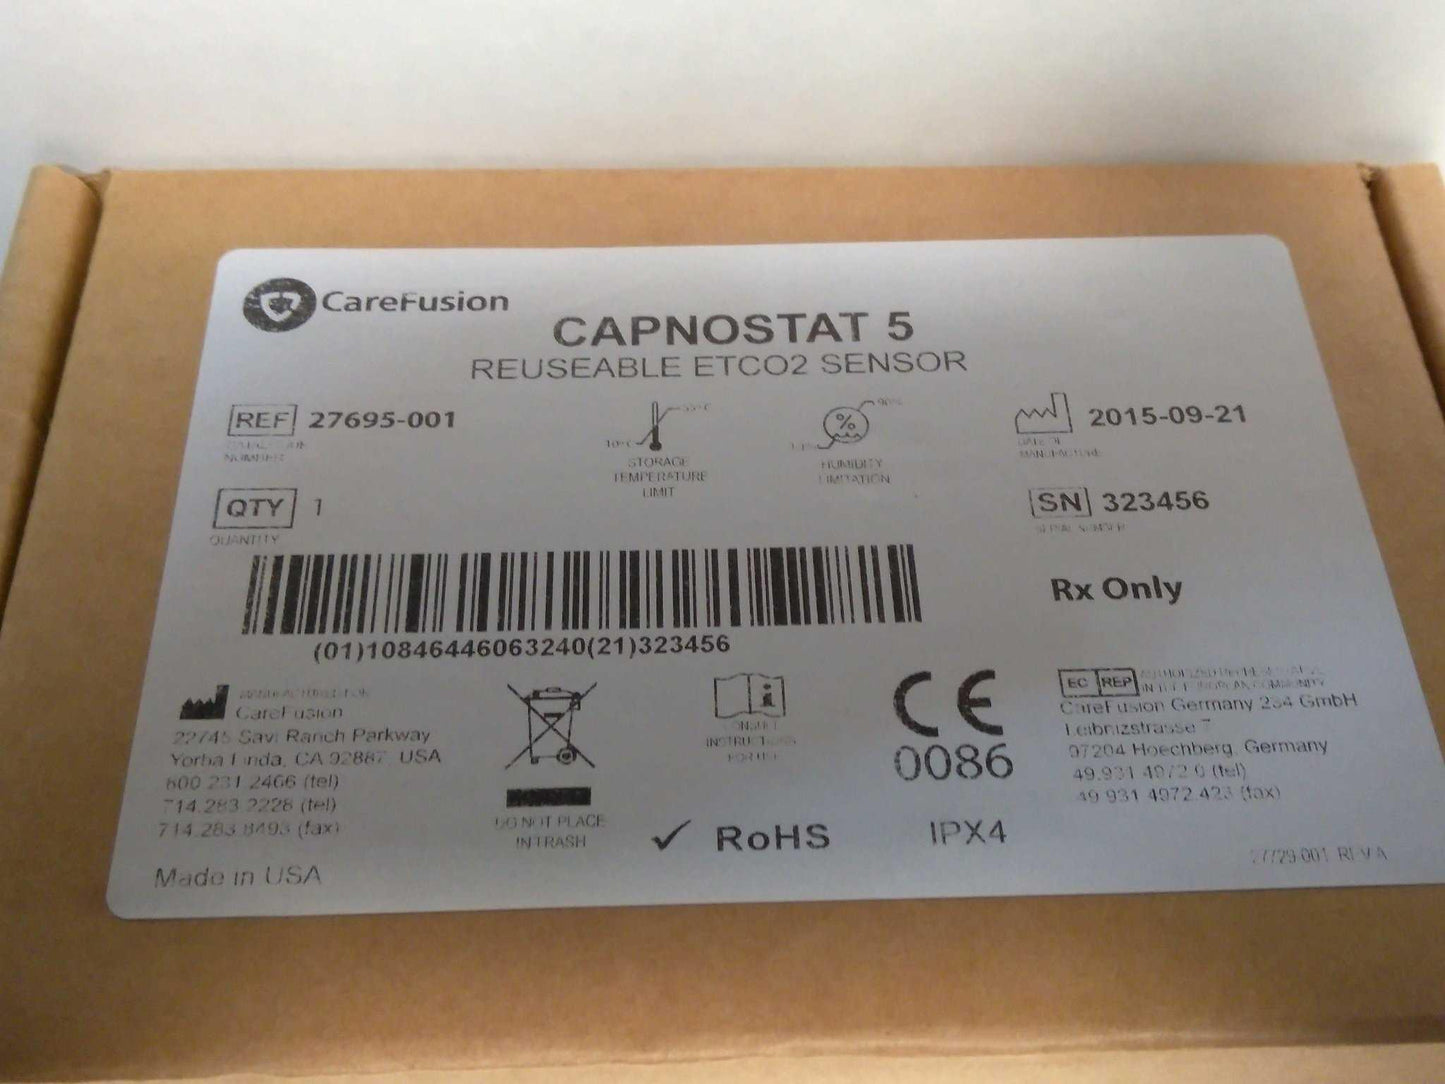 NEW Carefusion 17509 Capnography Vela CO2 Upgrade Kit 16546 16607 16605 Parts Warranty FREE Shipping - MBR Medicals